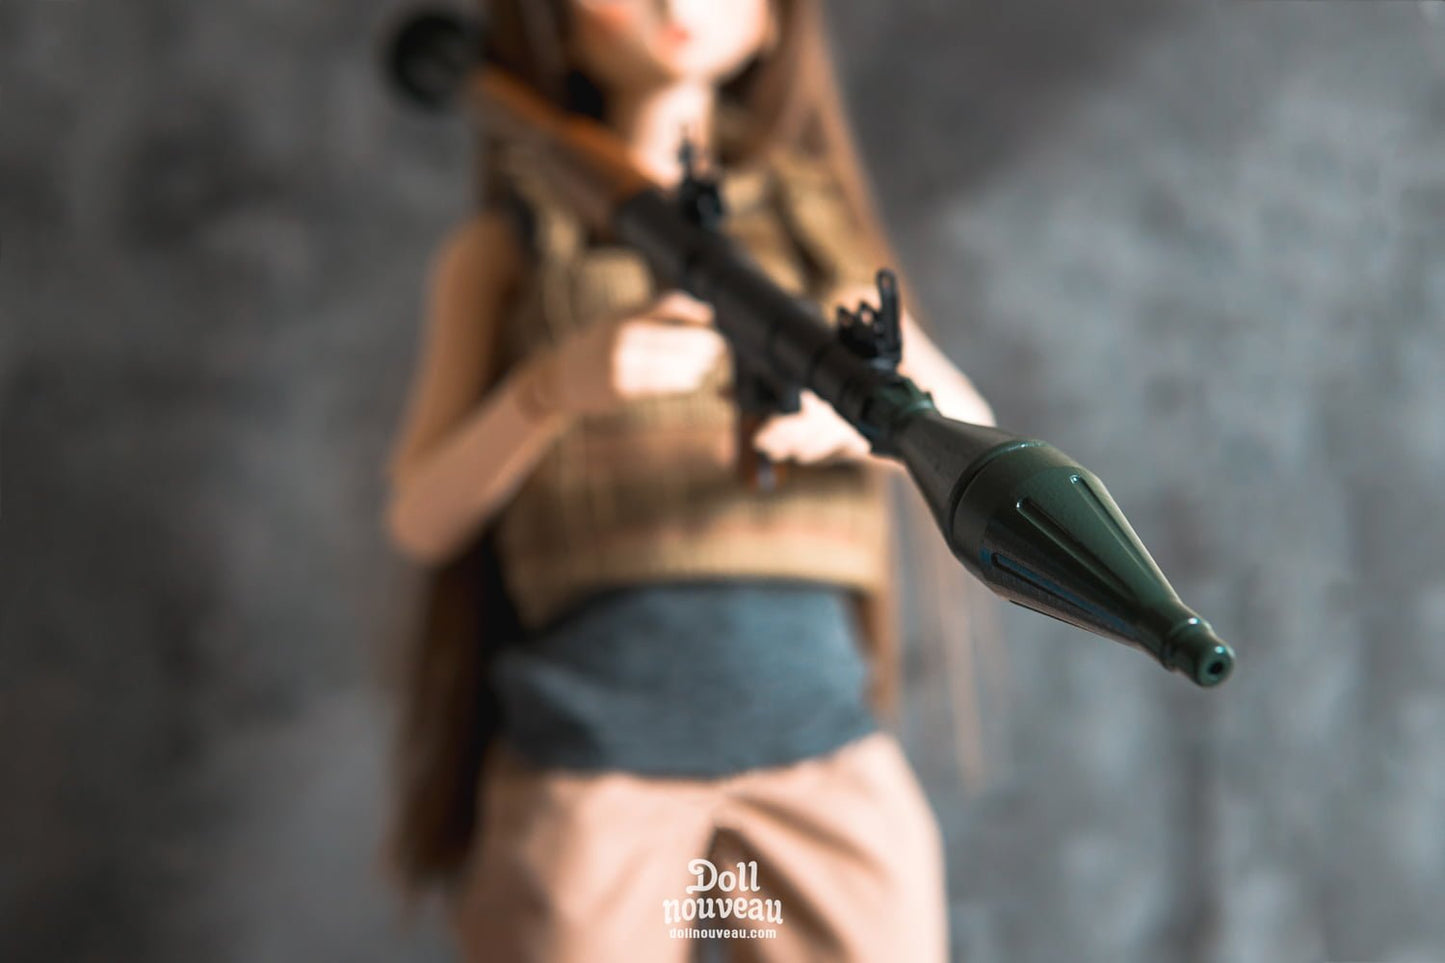 RPG-7 Miniature